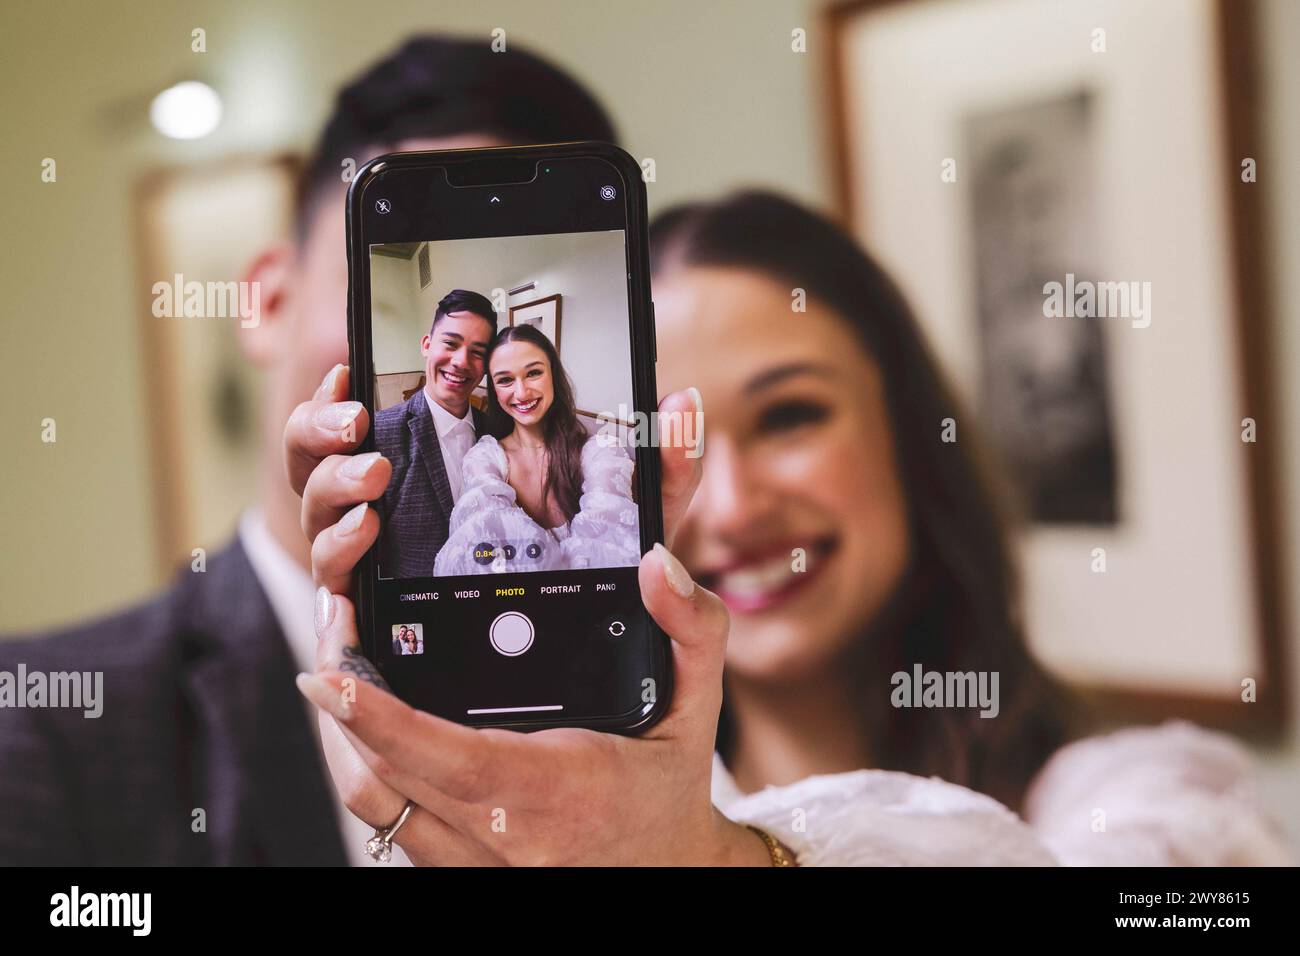 Fotograf, der frischvermählte Paare vor der Kamera festnimmt Stockfoto